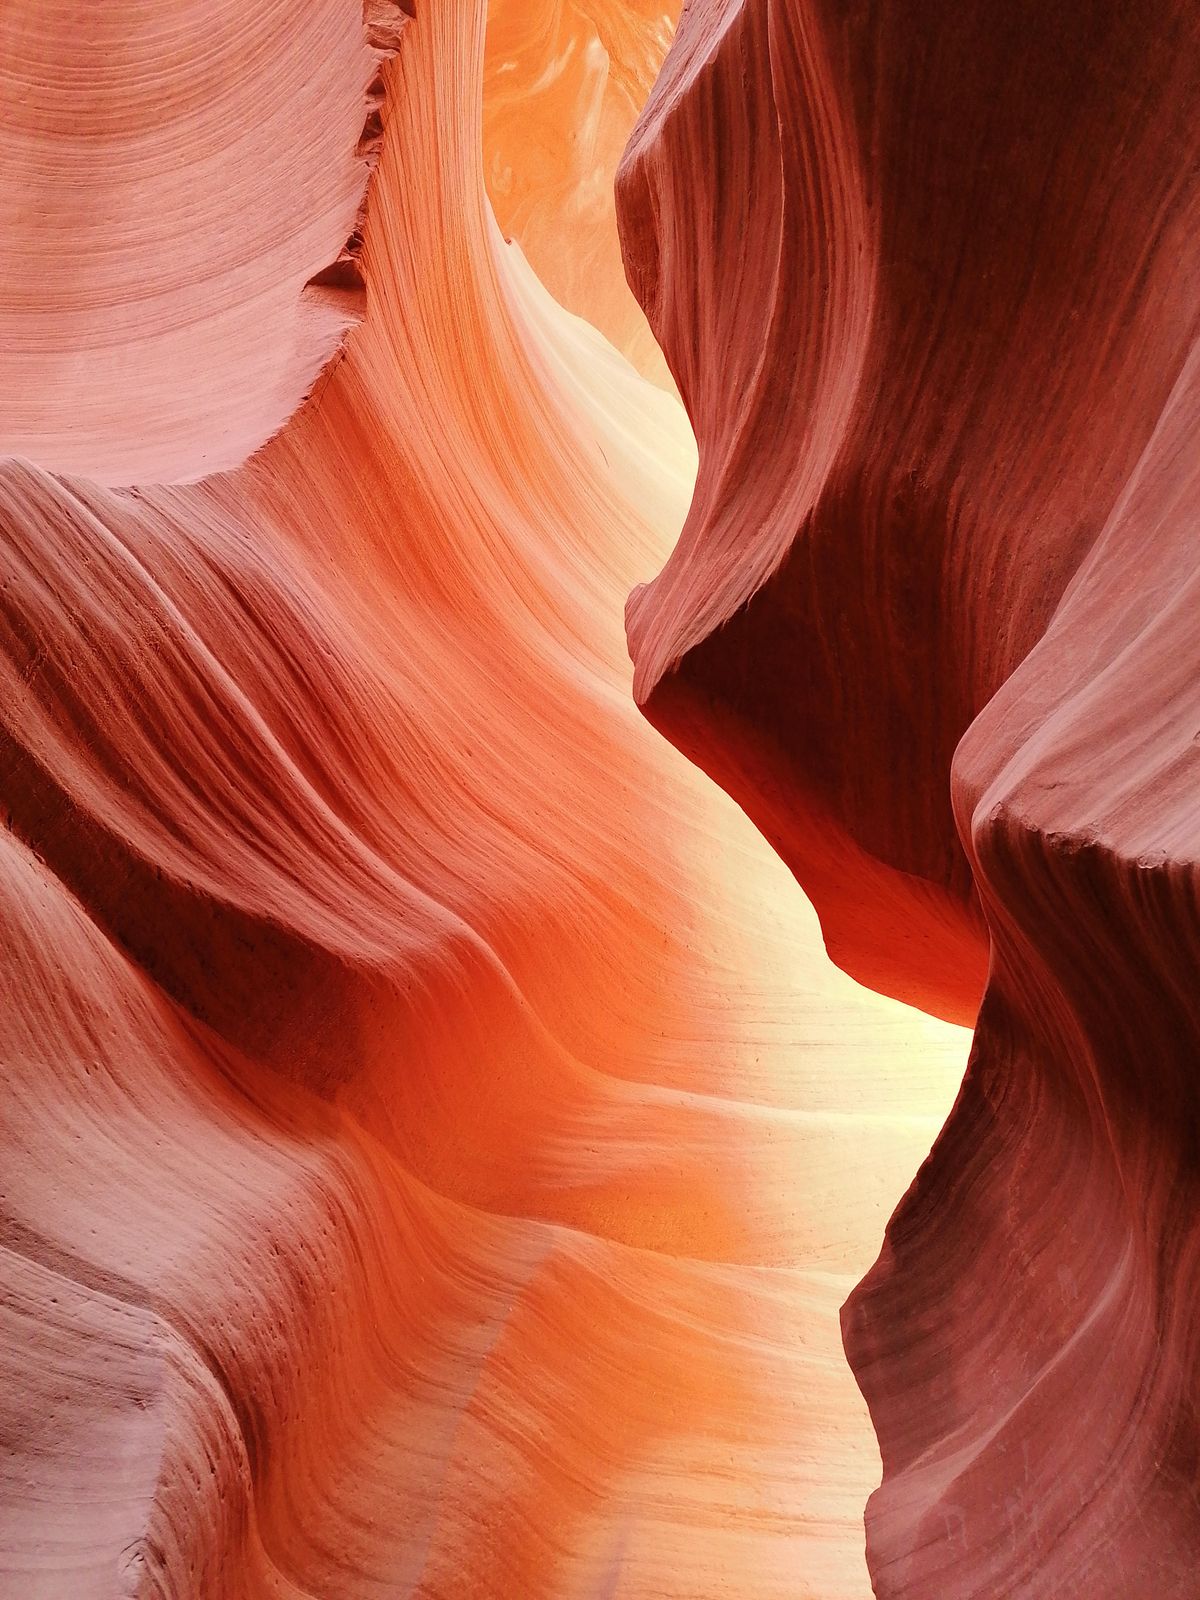 Desert cave